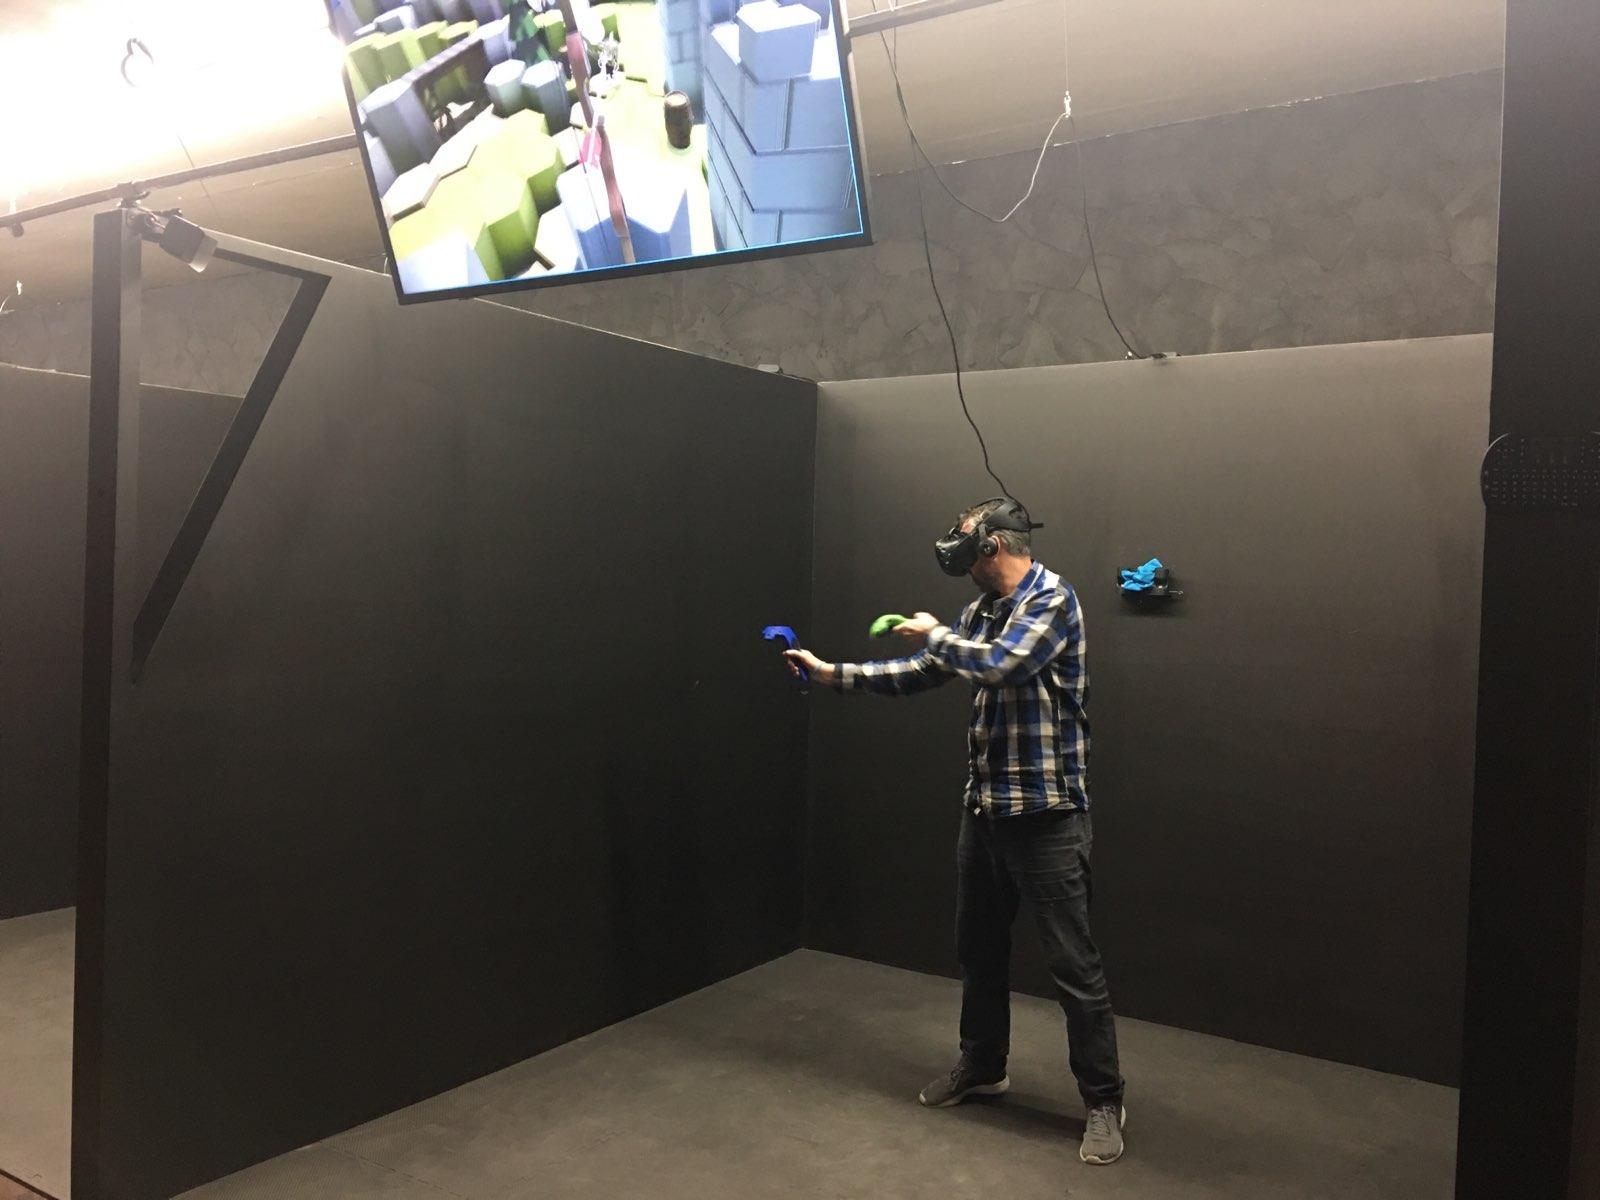 Idaho's First Arcade - Idaho Virtual Reality Council